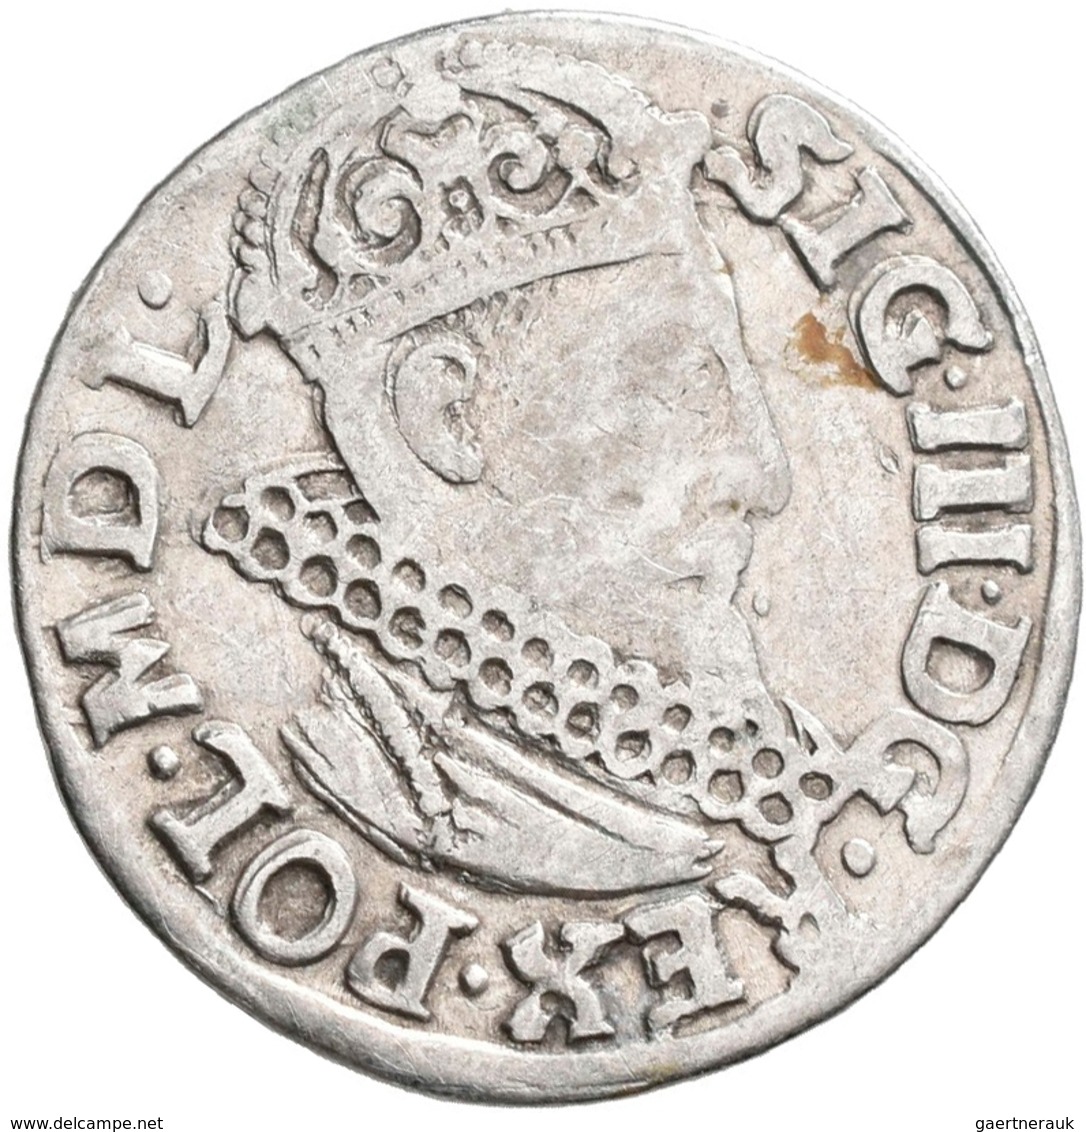 Polen: Sigismund III. (Zygmunt III. Waza) 1587-1632: Lot 6 Münzen: 3 Gröscher / Grosze (Trojak) Um 1 - Poland